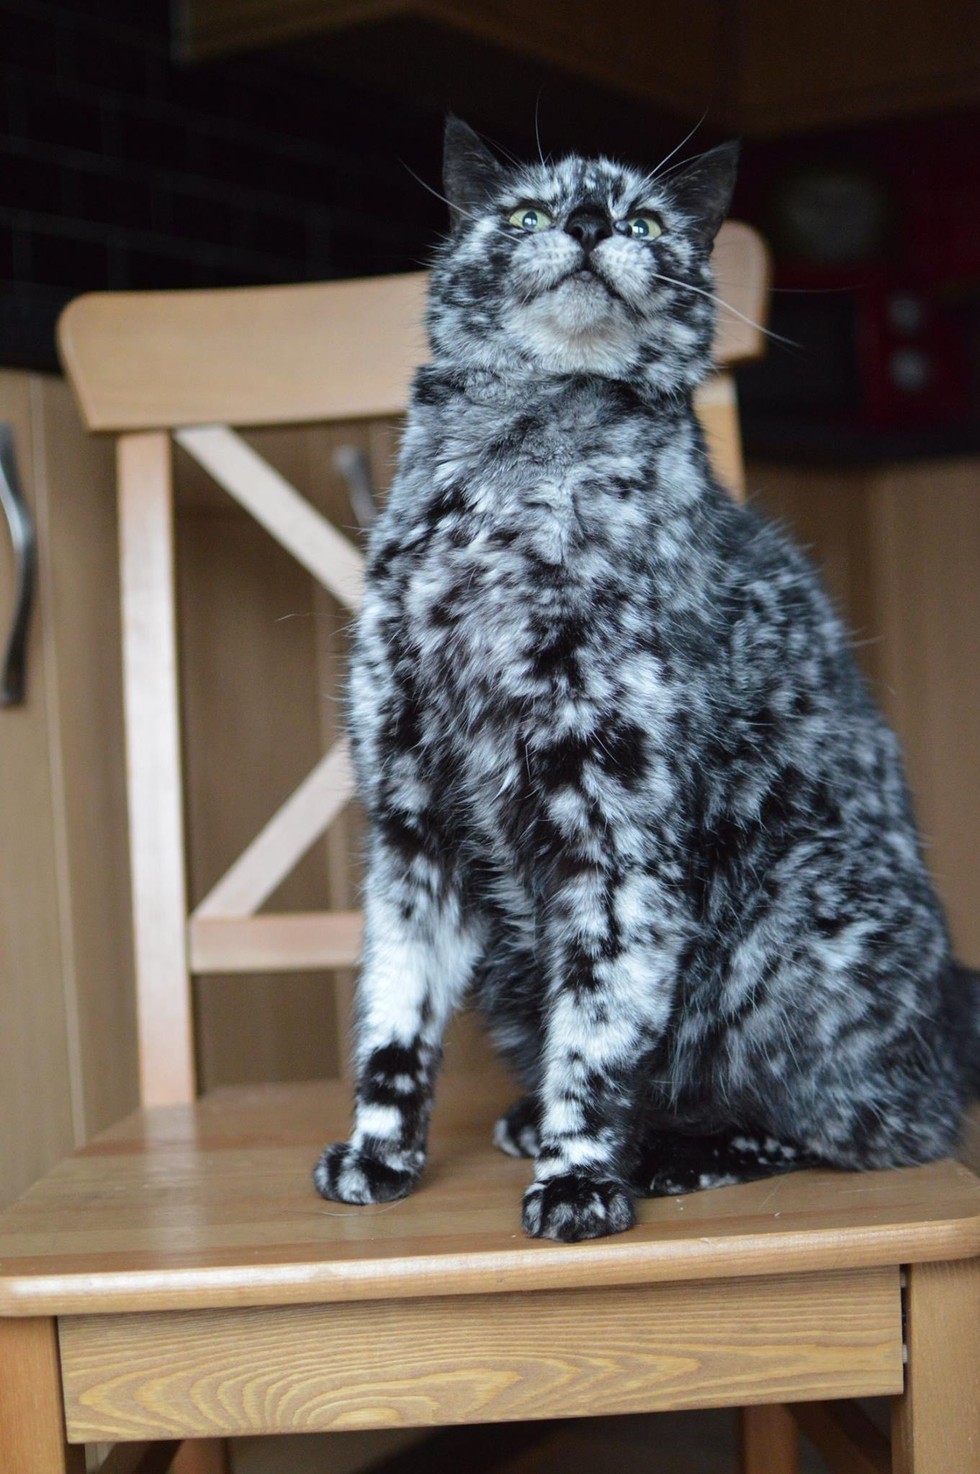 Scrappy Born a Black Cat  Now Turning White due to Vitiligo 